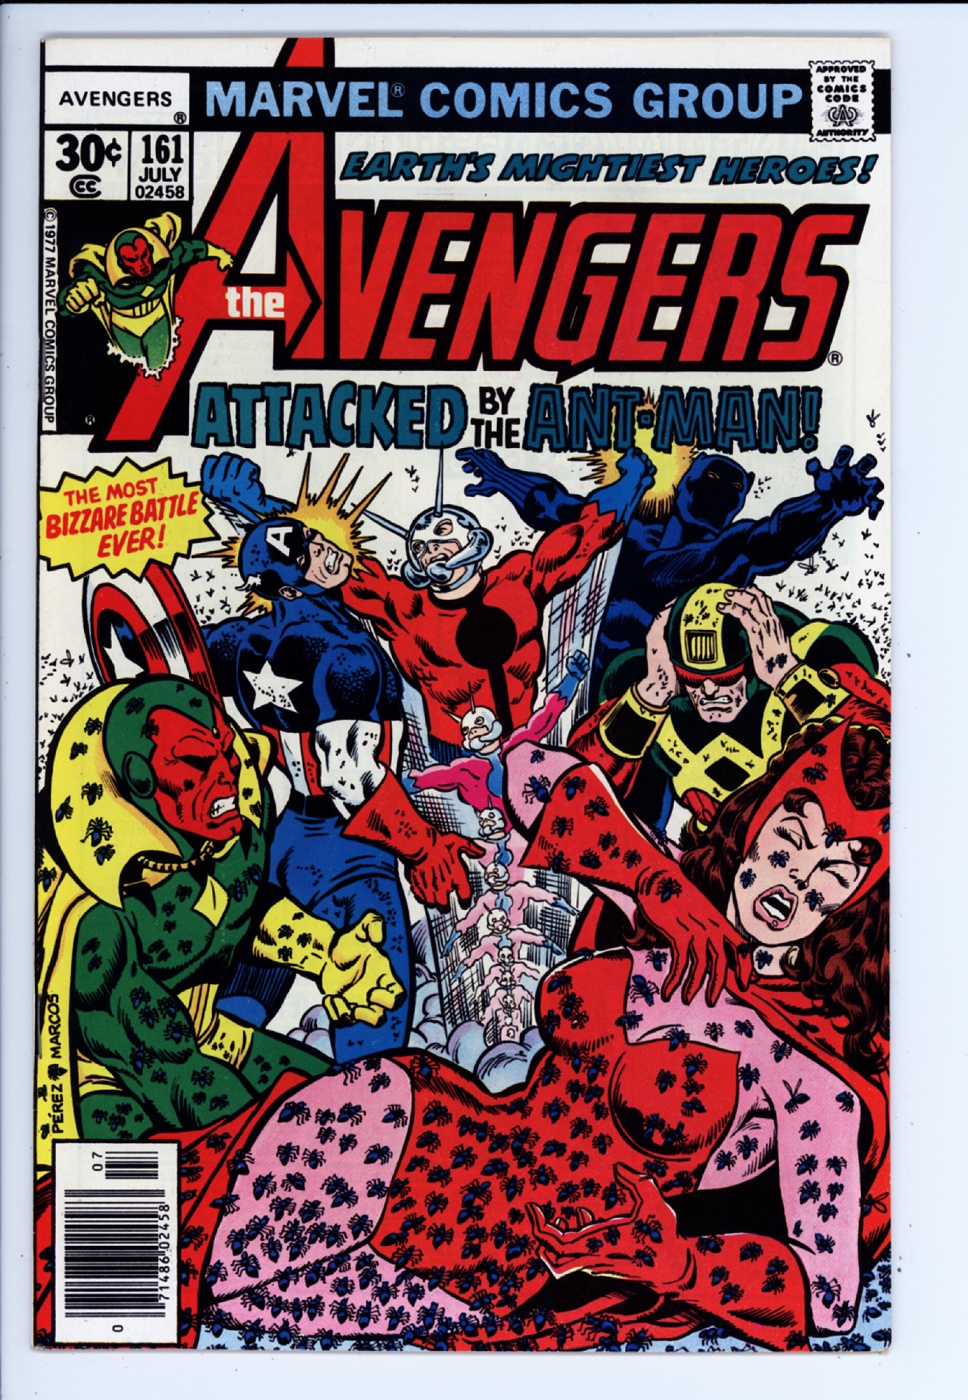 X-Men  Heft  161-190  zur Auswahl  Marvel US  nearmint 